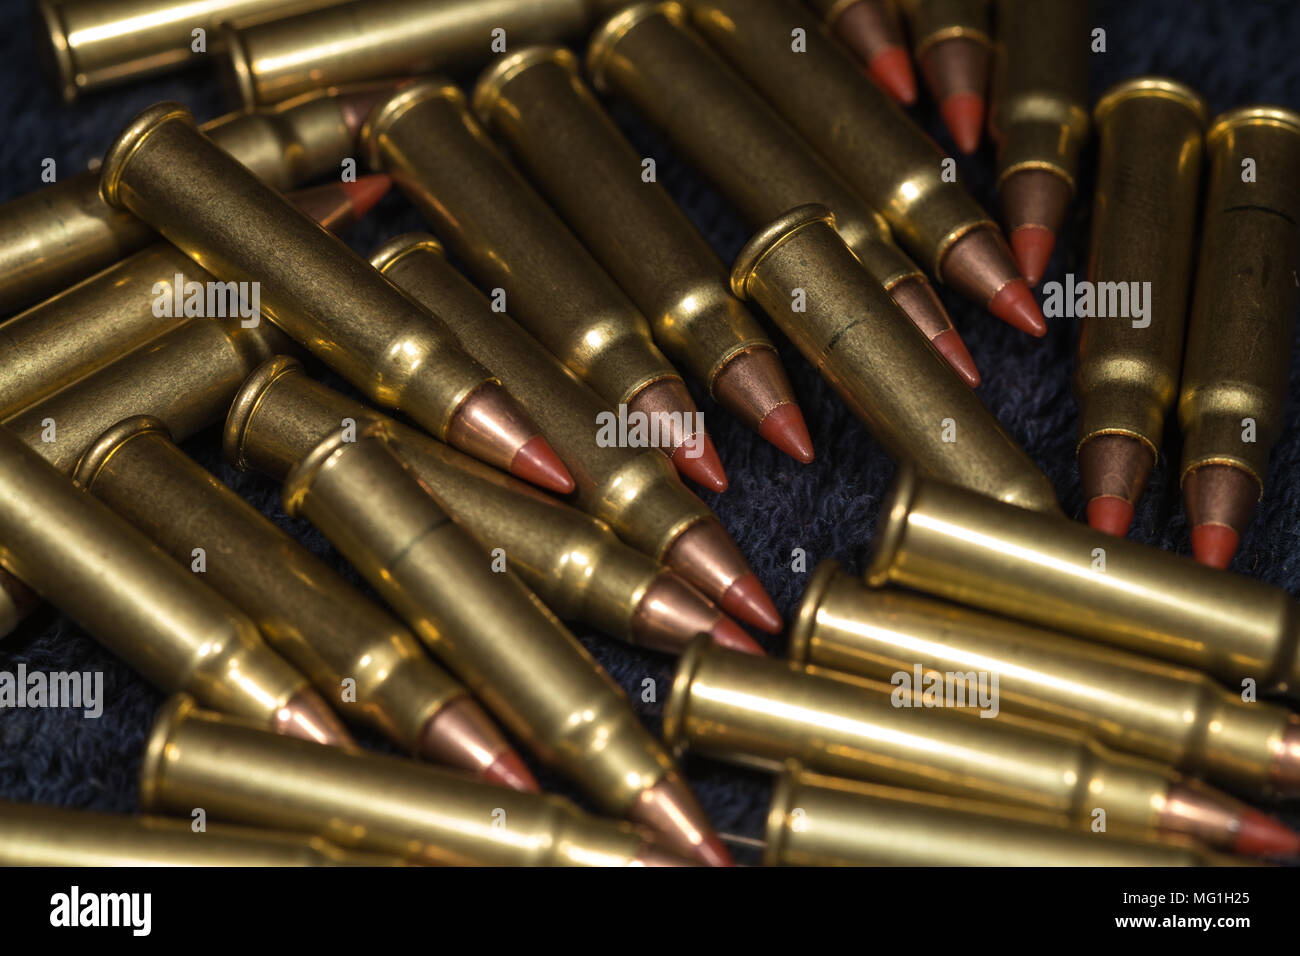 17 HMR Ammunition Stock Photo